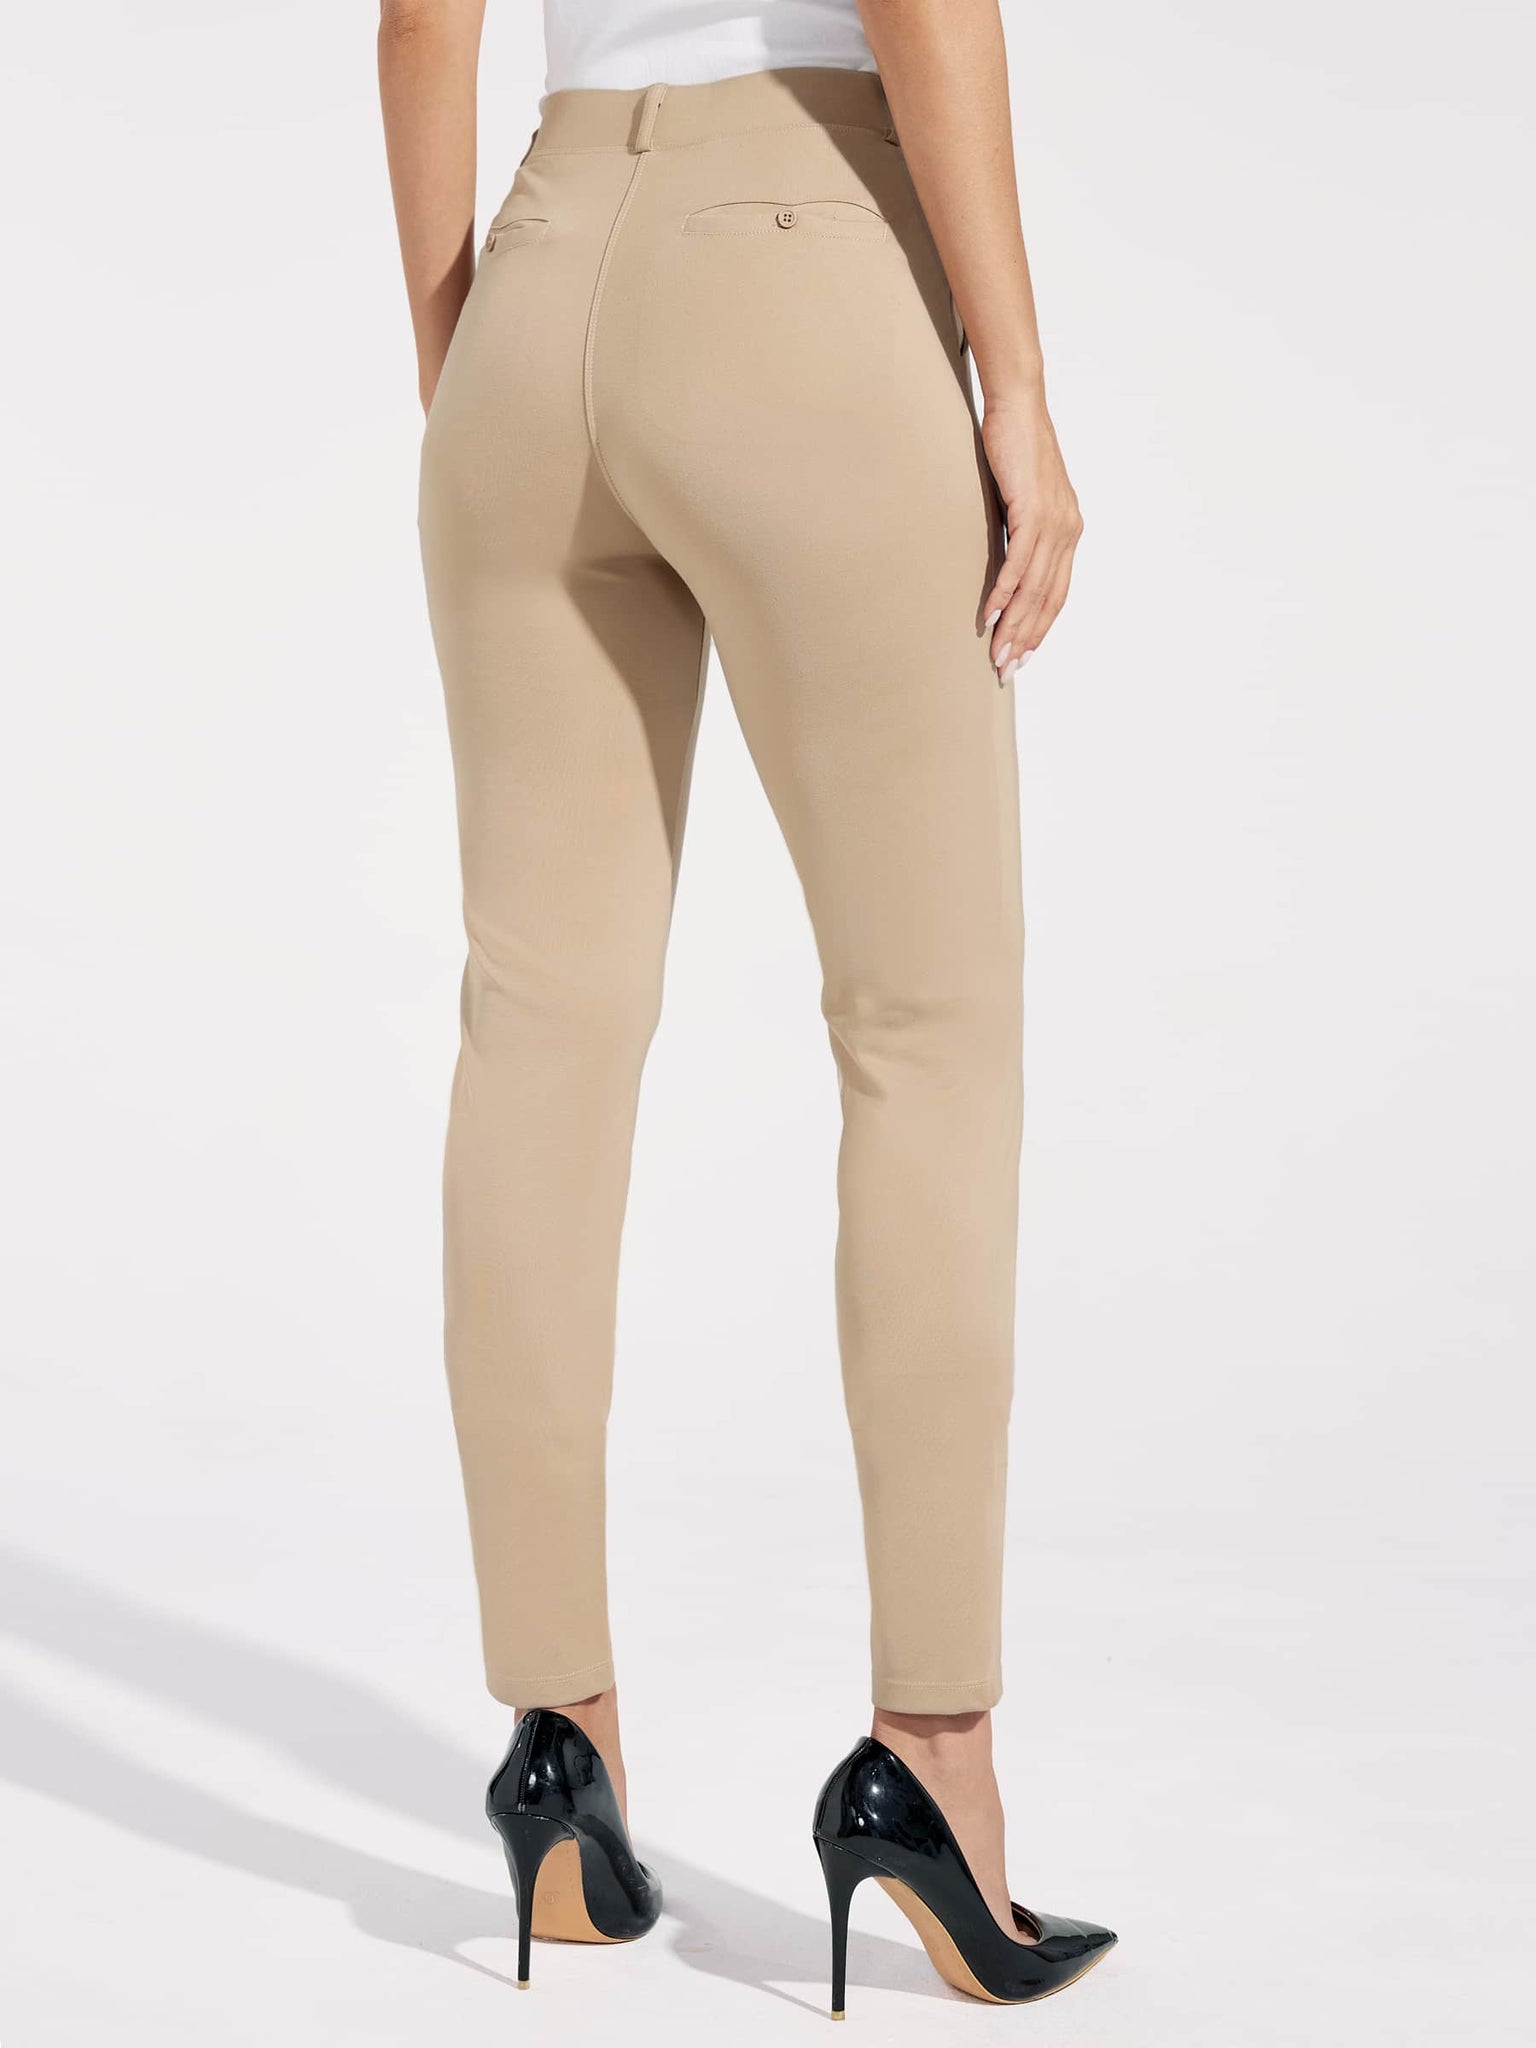 Women's Yoga Dress Pants Skinny 30Inch_Khaki_model3